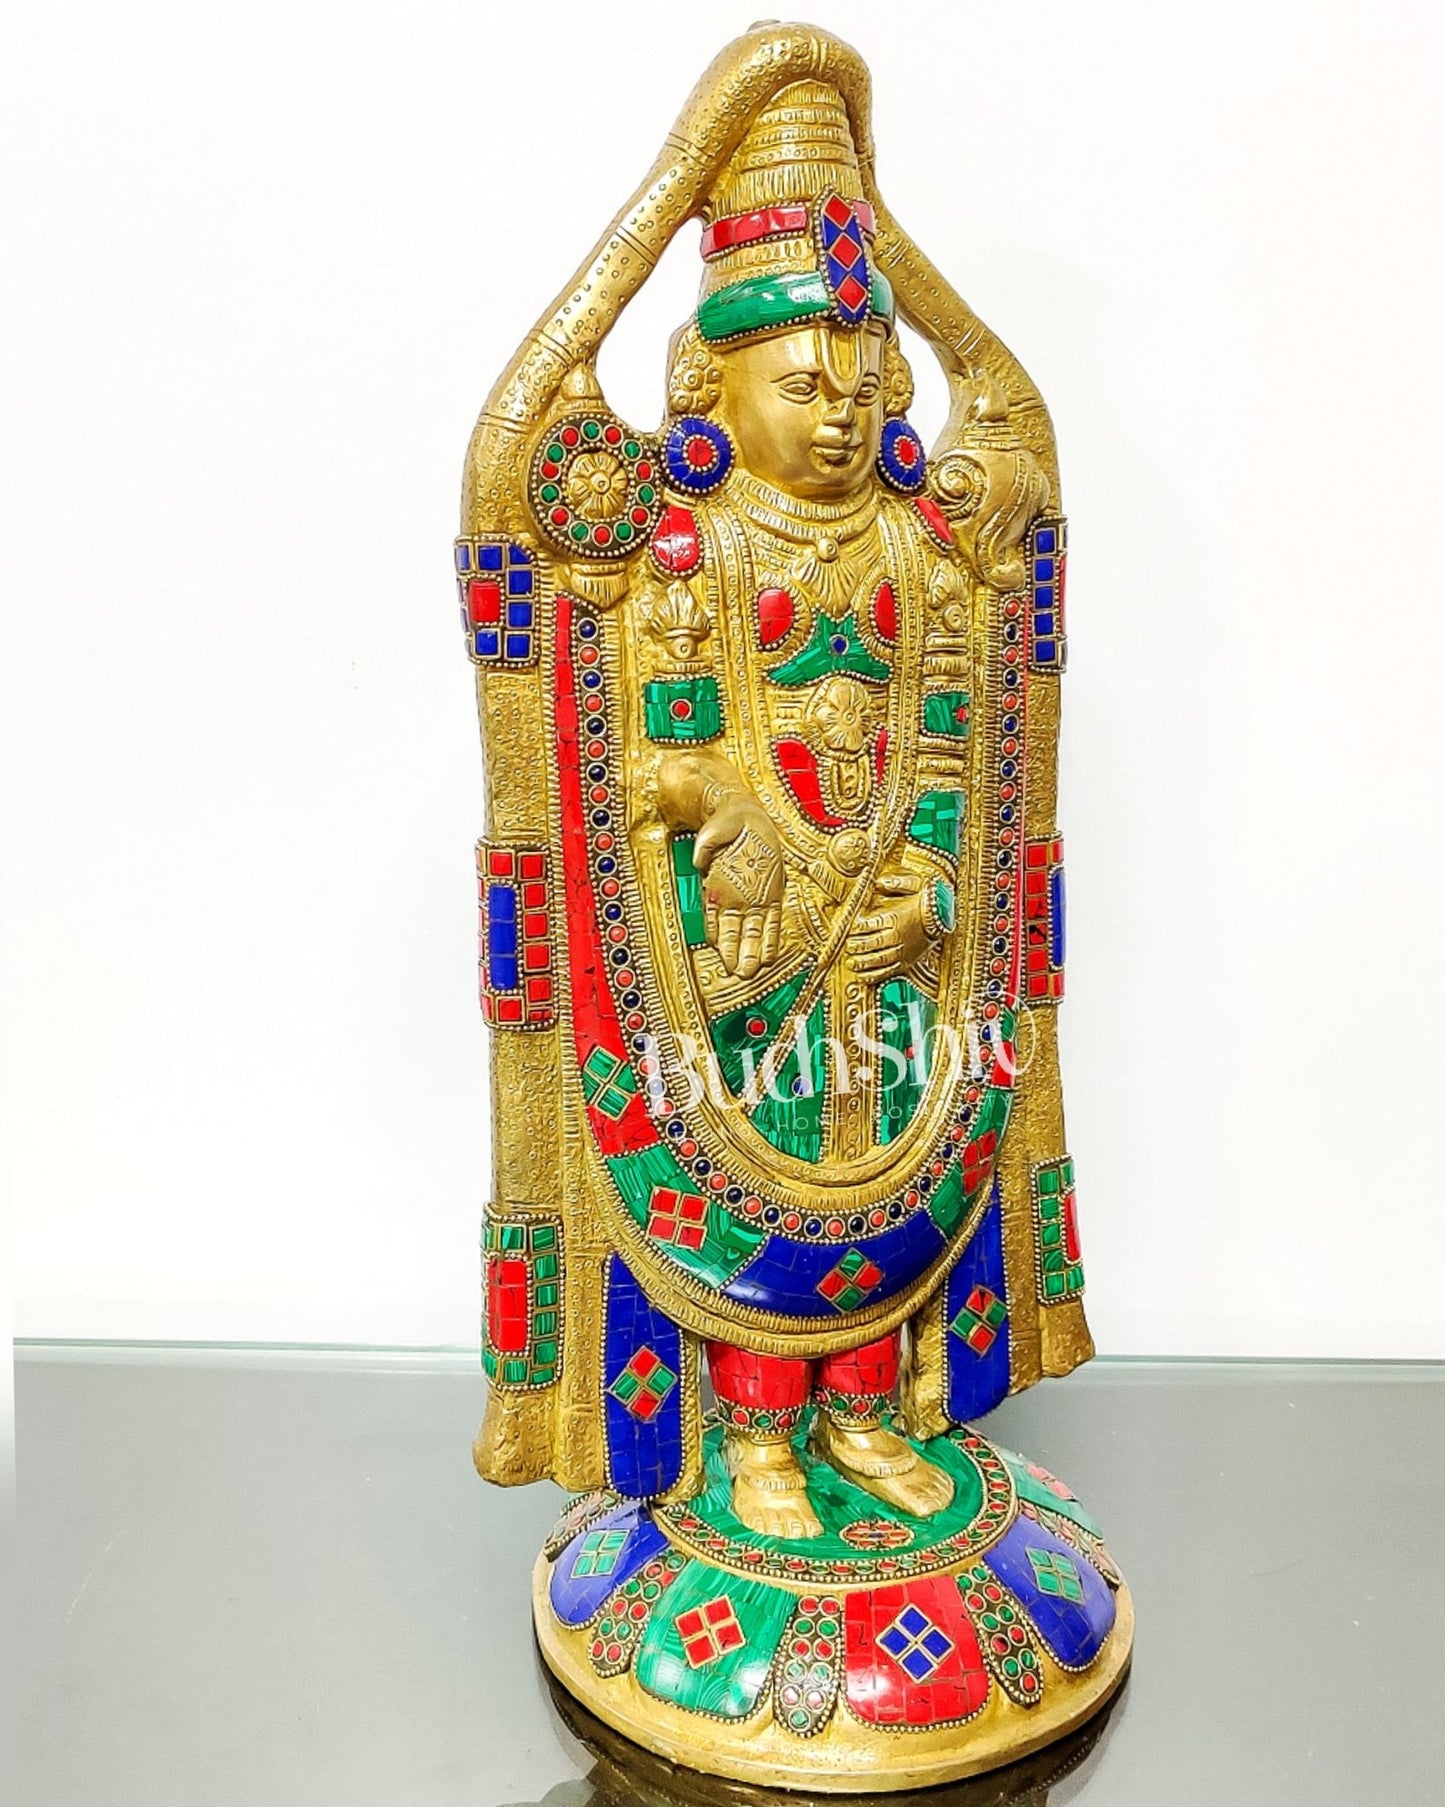 Tirupati Balaji Statue in Superfine Brass 18" with stonework - Budhshiv.com